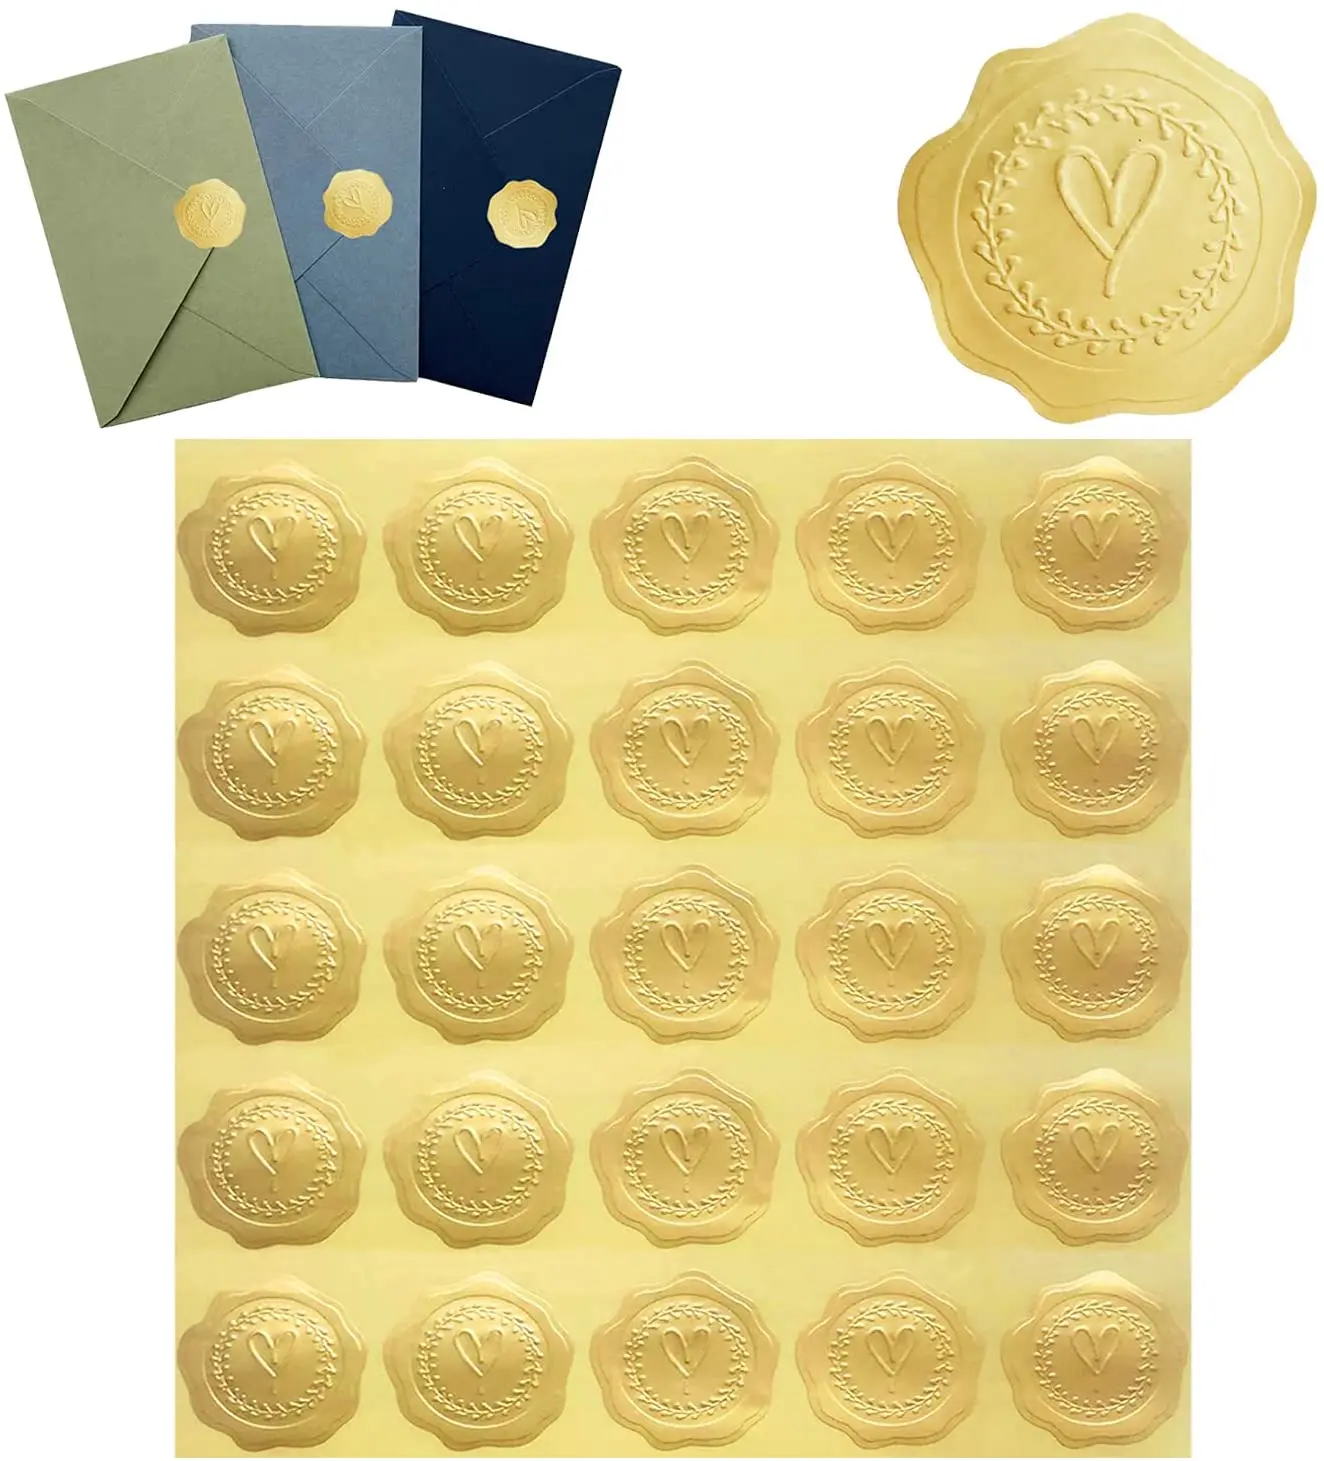 Gold Embossed Wax Seal Looking Love Heart Envelope Seals Stickers 1.5 Inch Embossing Adhesive Envelope Sealing Label